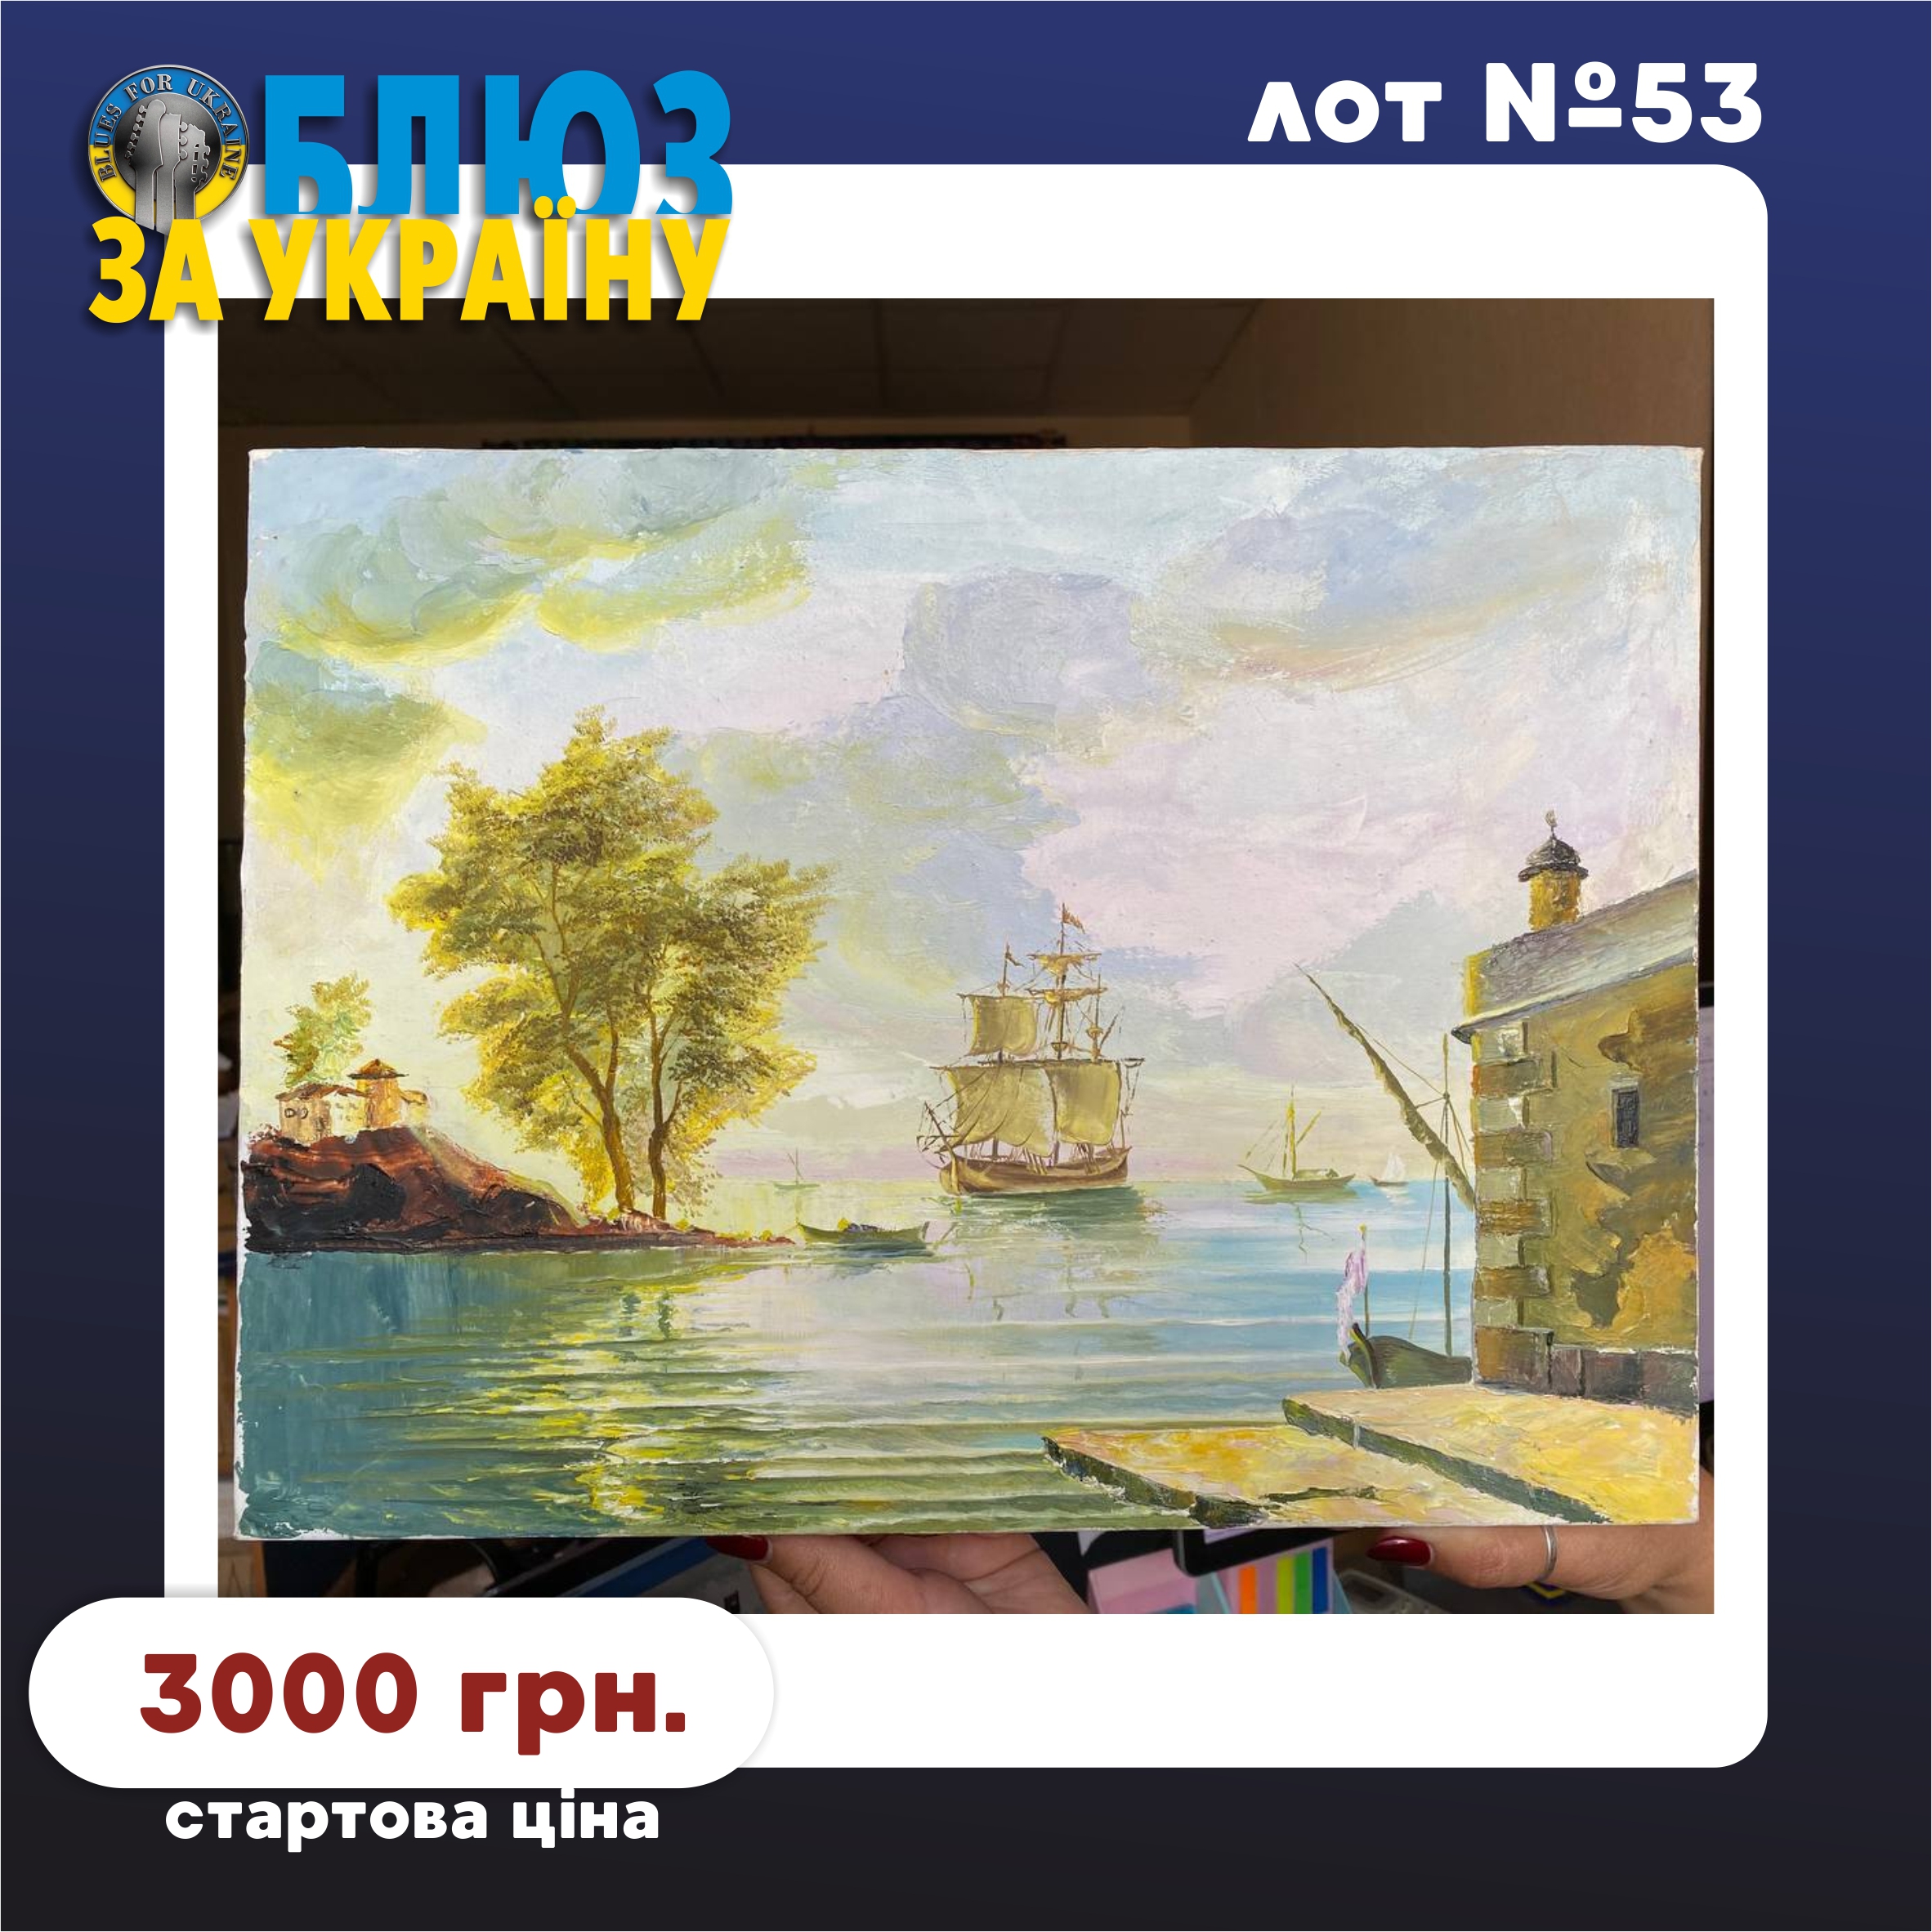 Lot №53. Картина "В гавані" (Painting "In the harbor")